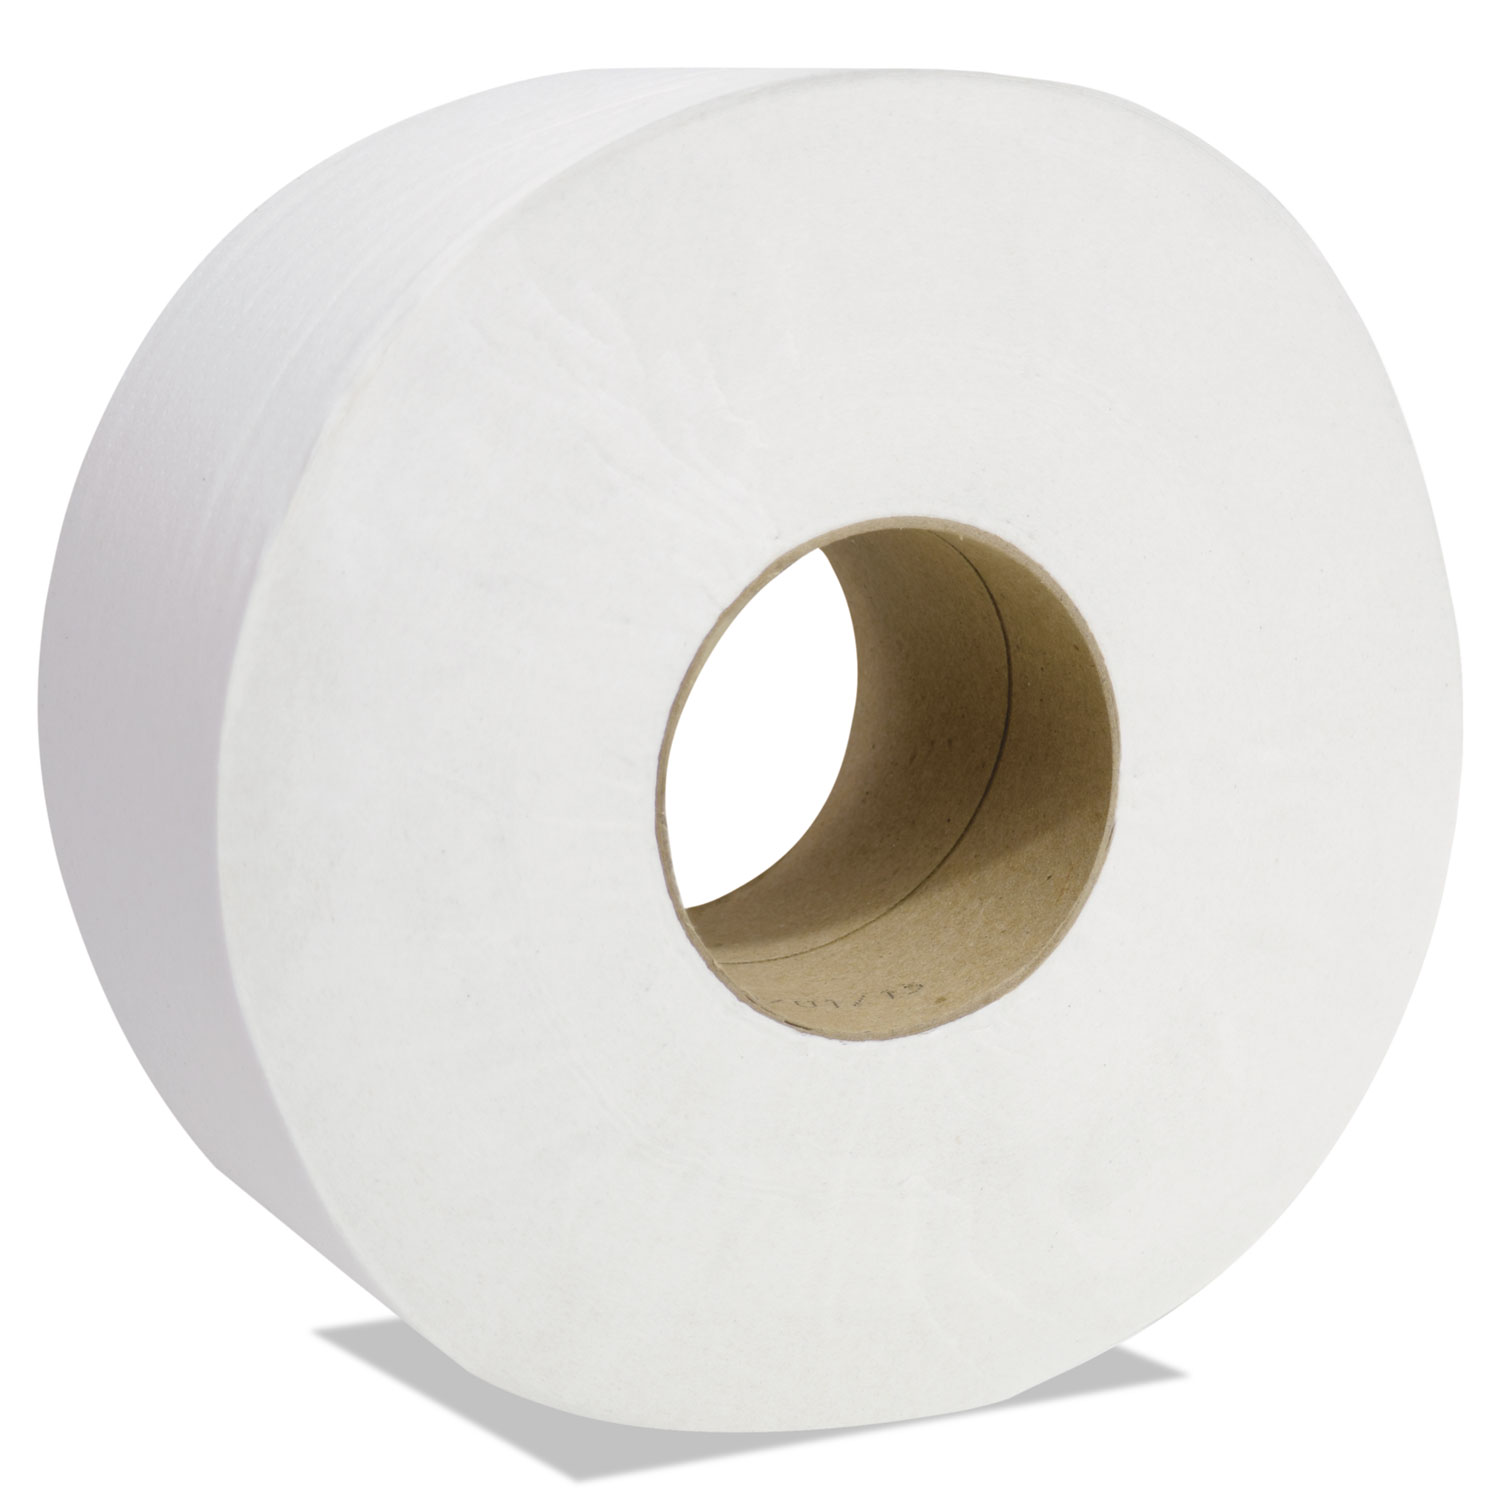 Decor Jumbo Roll Jr. Tissue, 1-Ply, White, 3 1/2 x 1500, 12 Rolls/Carton